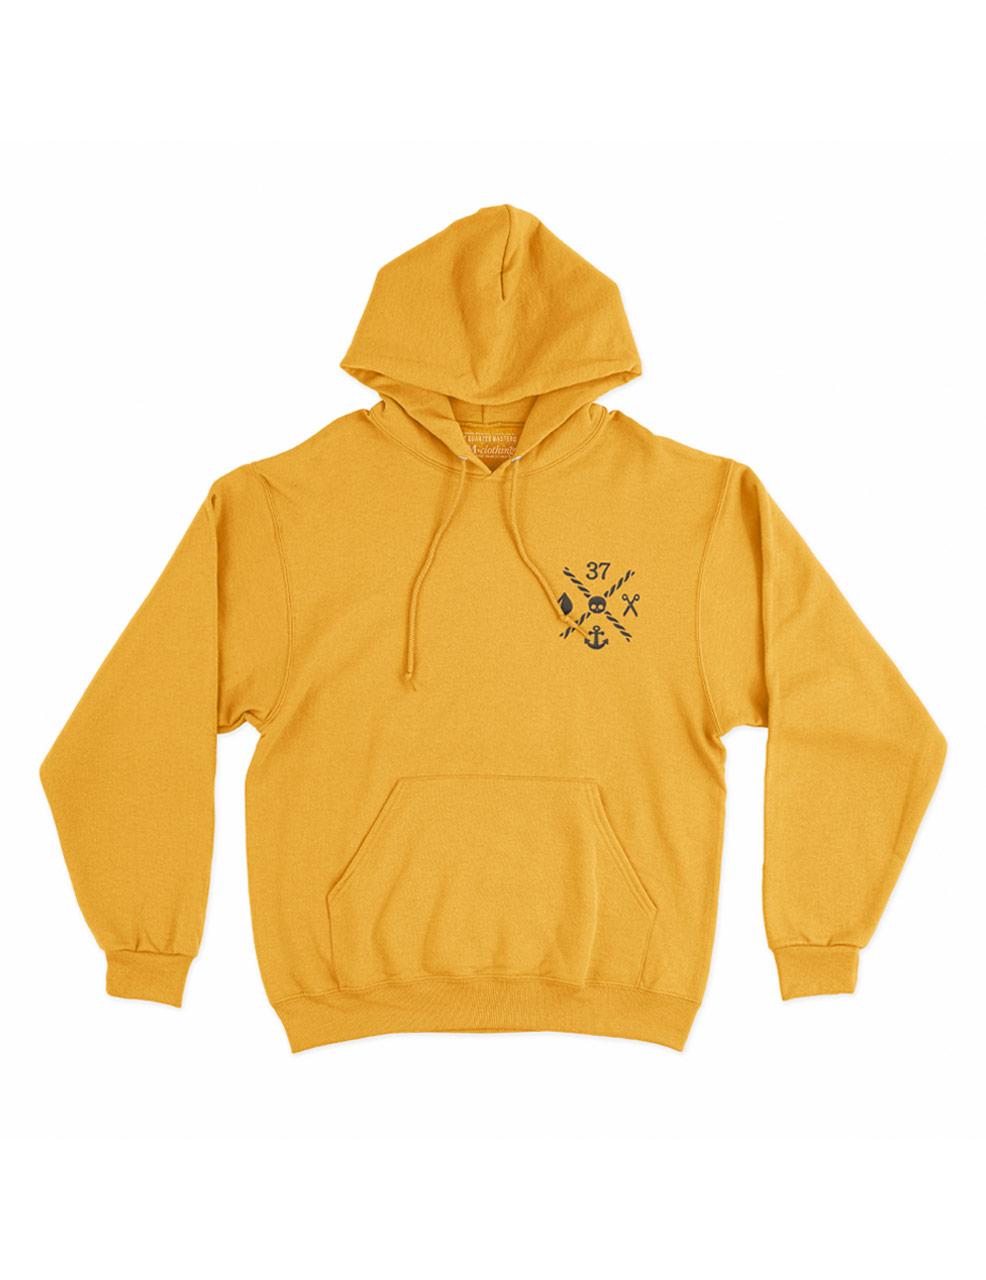 Unisex pullover hoodie — honey mustard (front view)